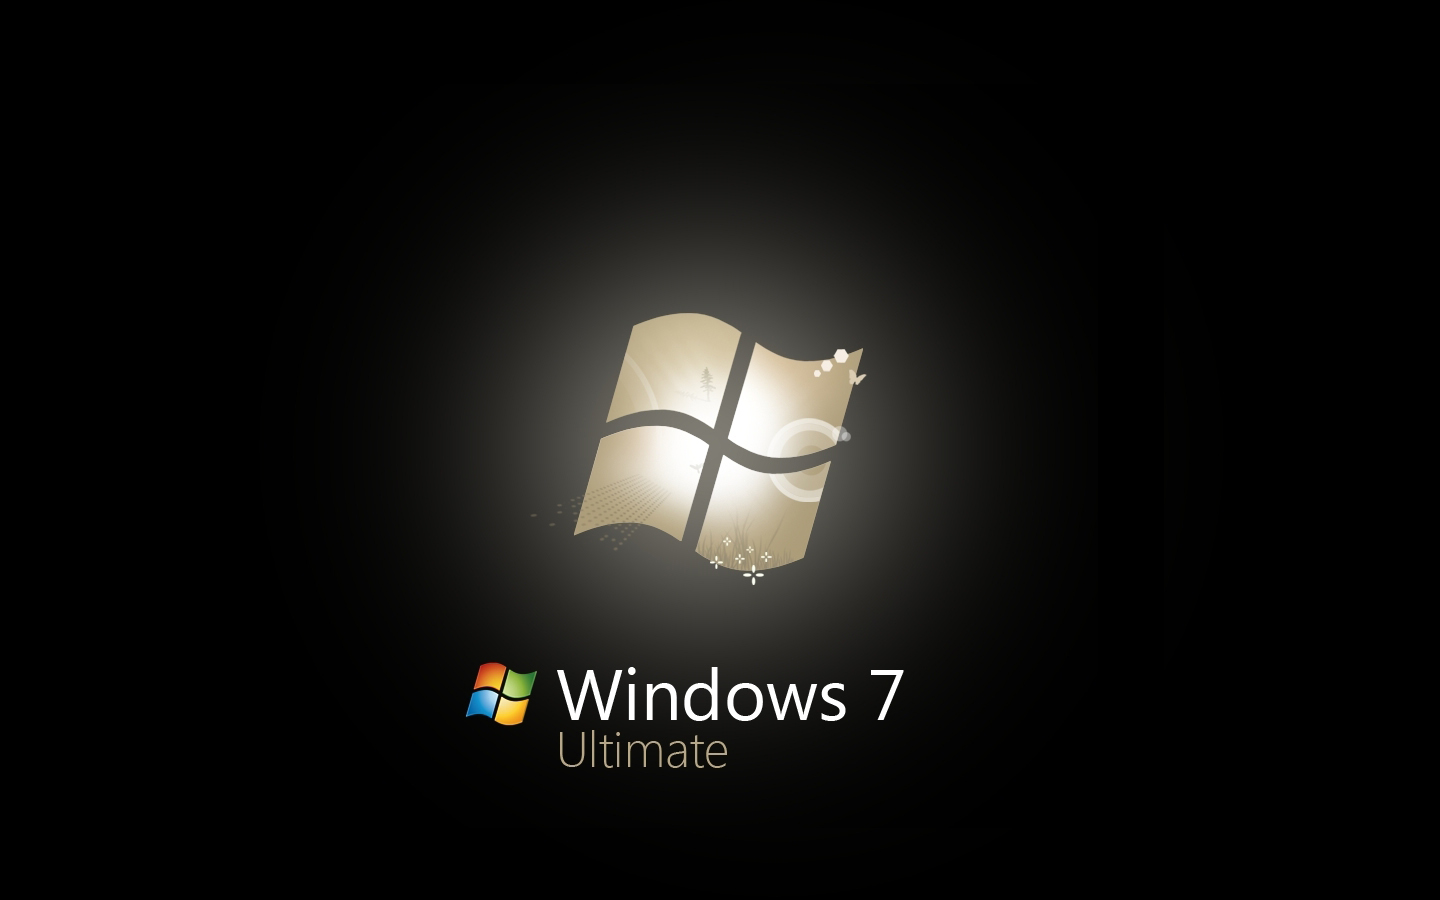 [48+] Windows 7 Ultimate Wallpaper Hd on WallpaperSafari